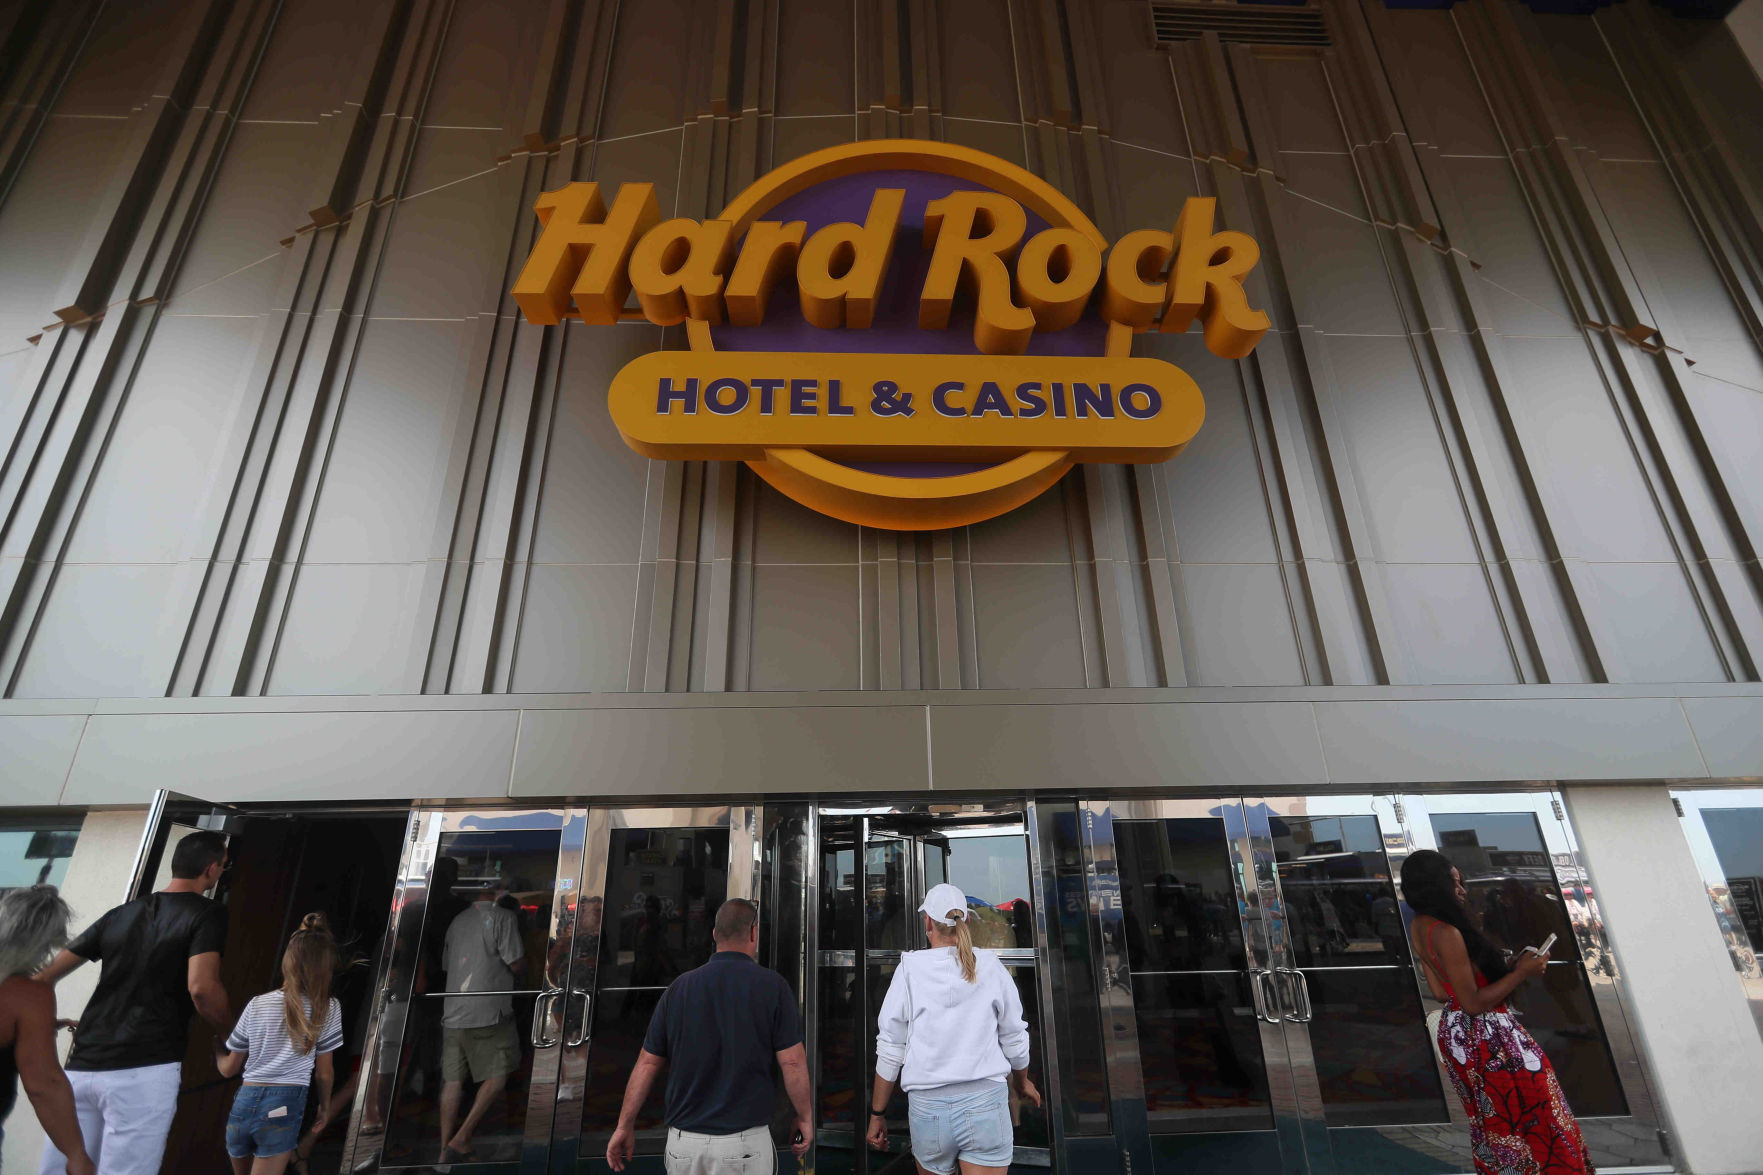 hard rock casino october events siux city